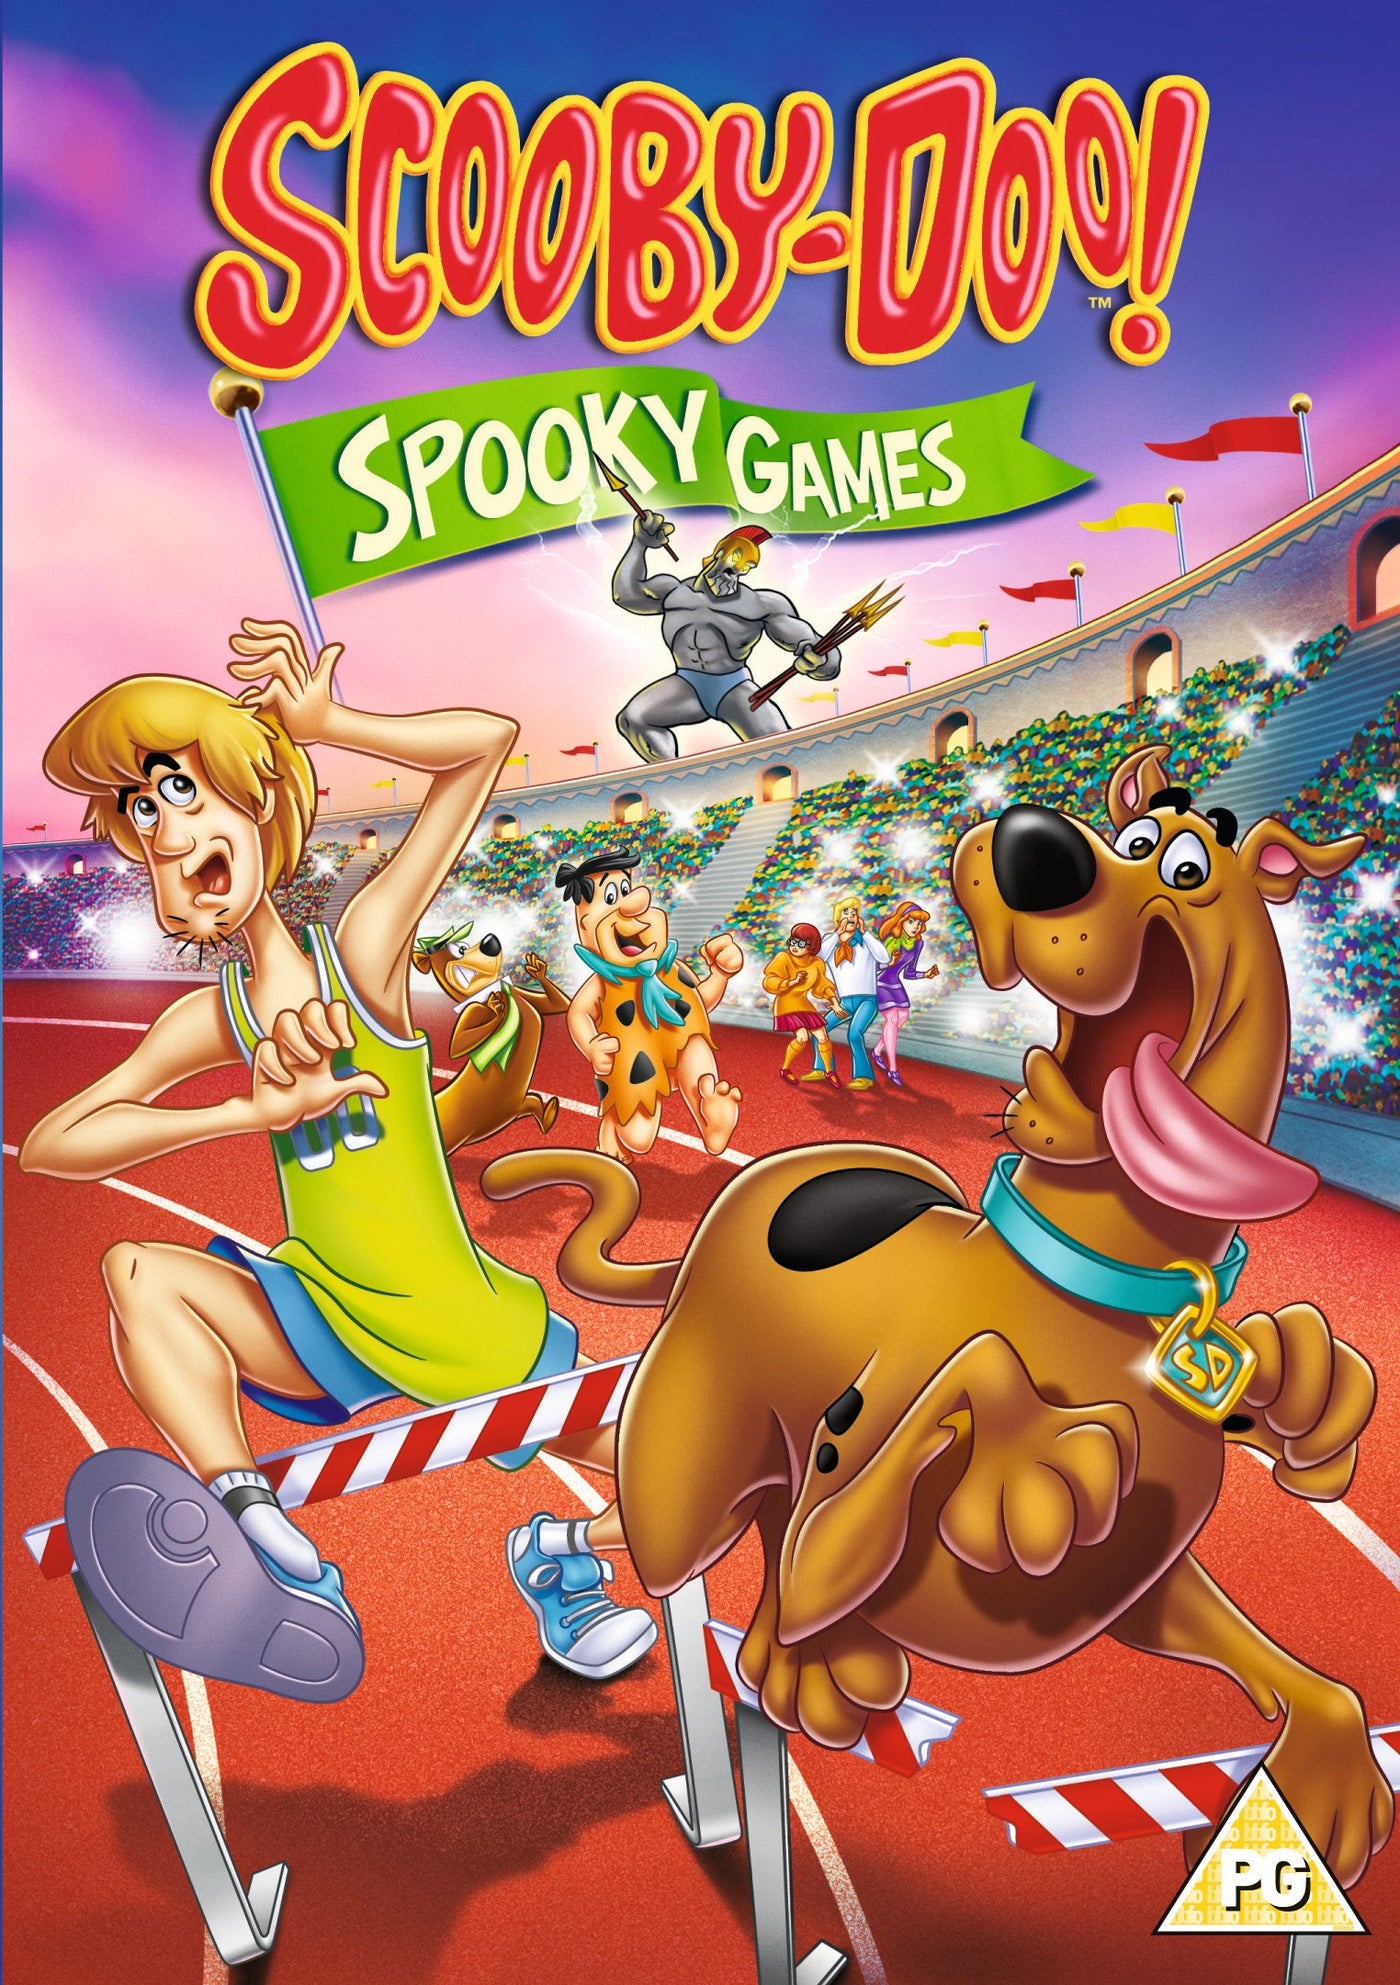 Scooby Spooky Games [2012] (DVD)